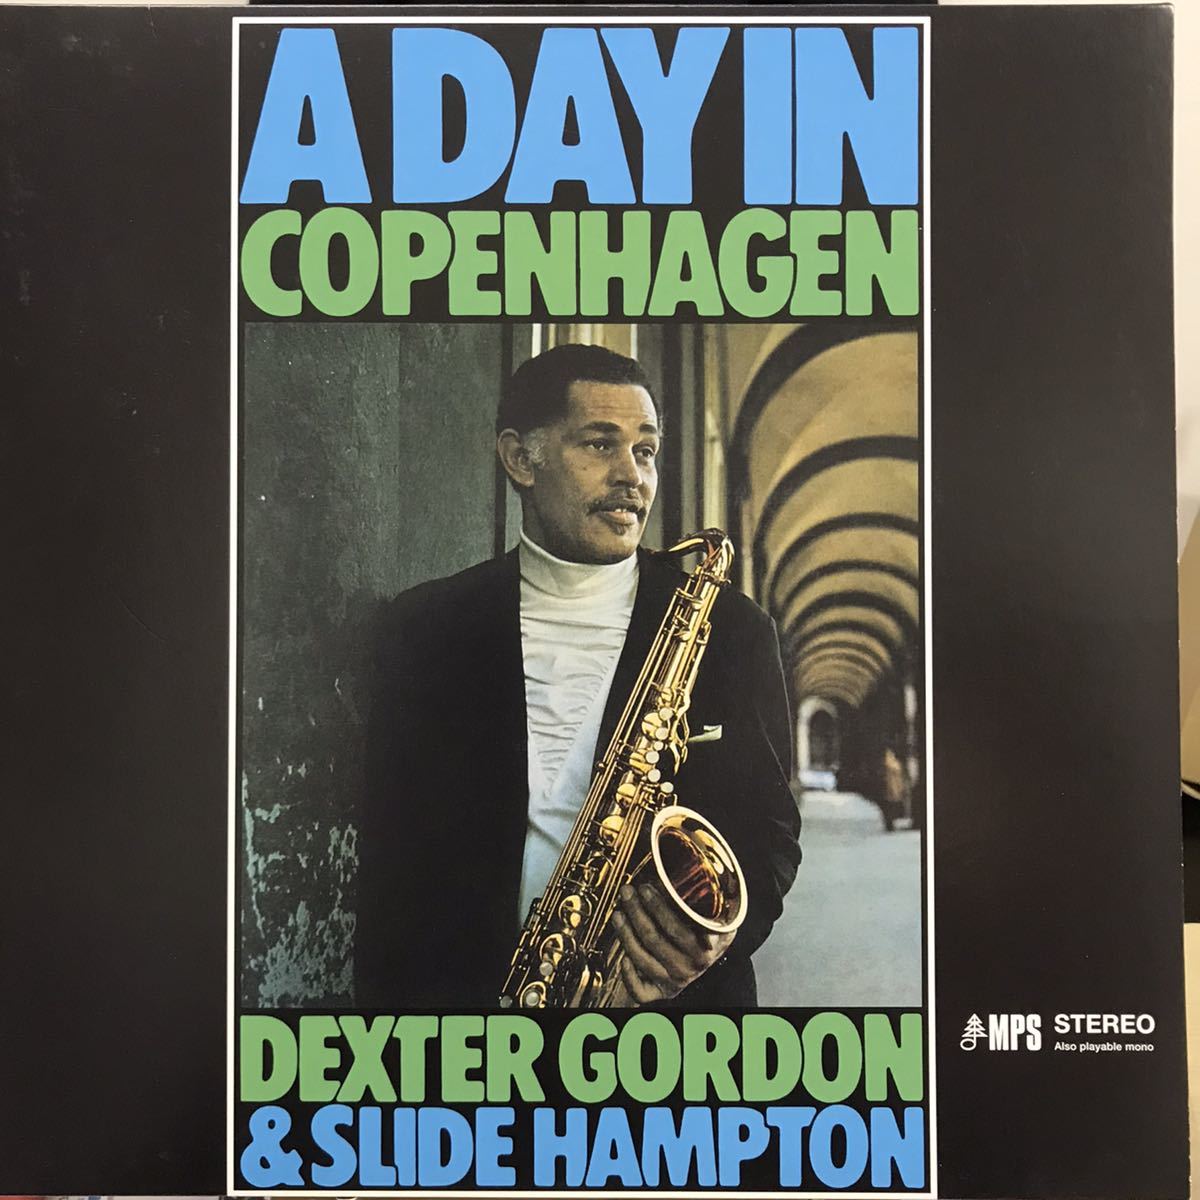   блиц-цена   красивый  пластинка   2009 год  вес  Reissue LP Dexter Gordon & Slide Hampton / A Day In Copenhagen